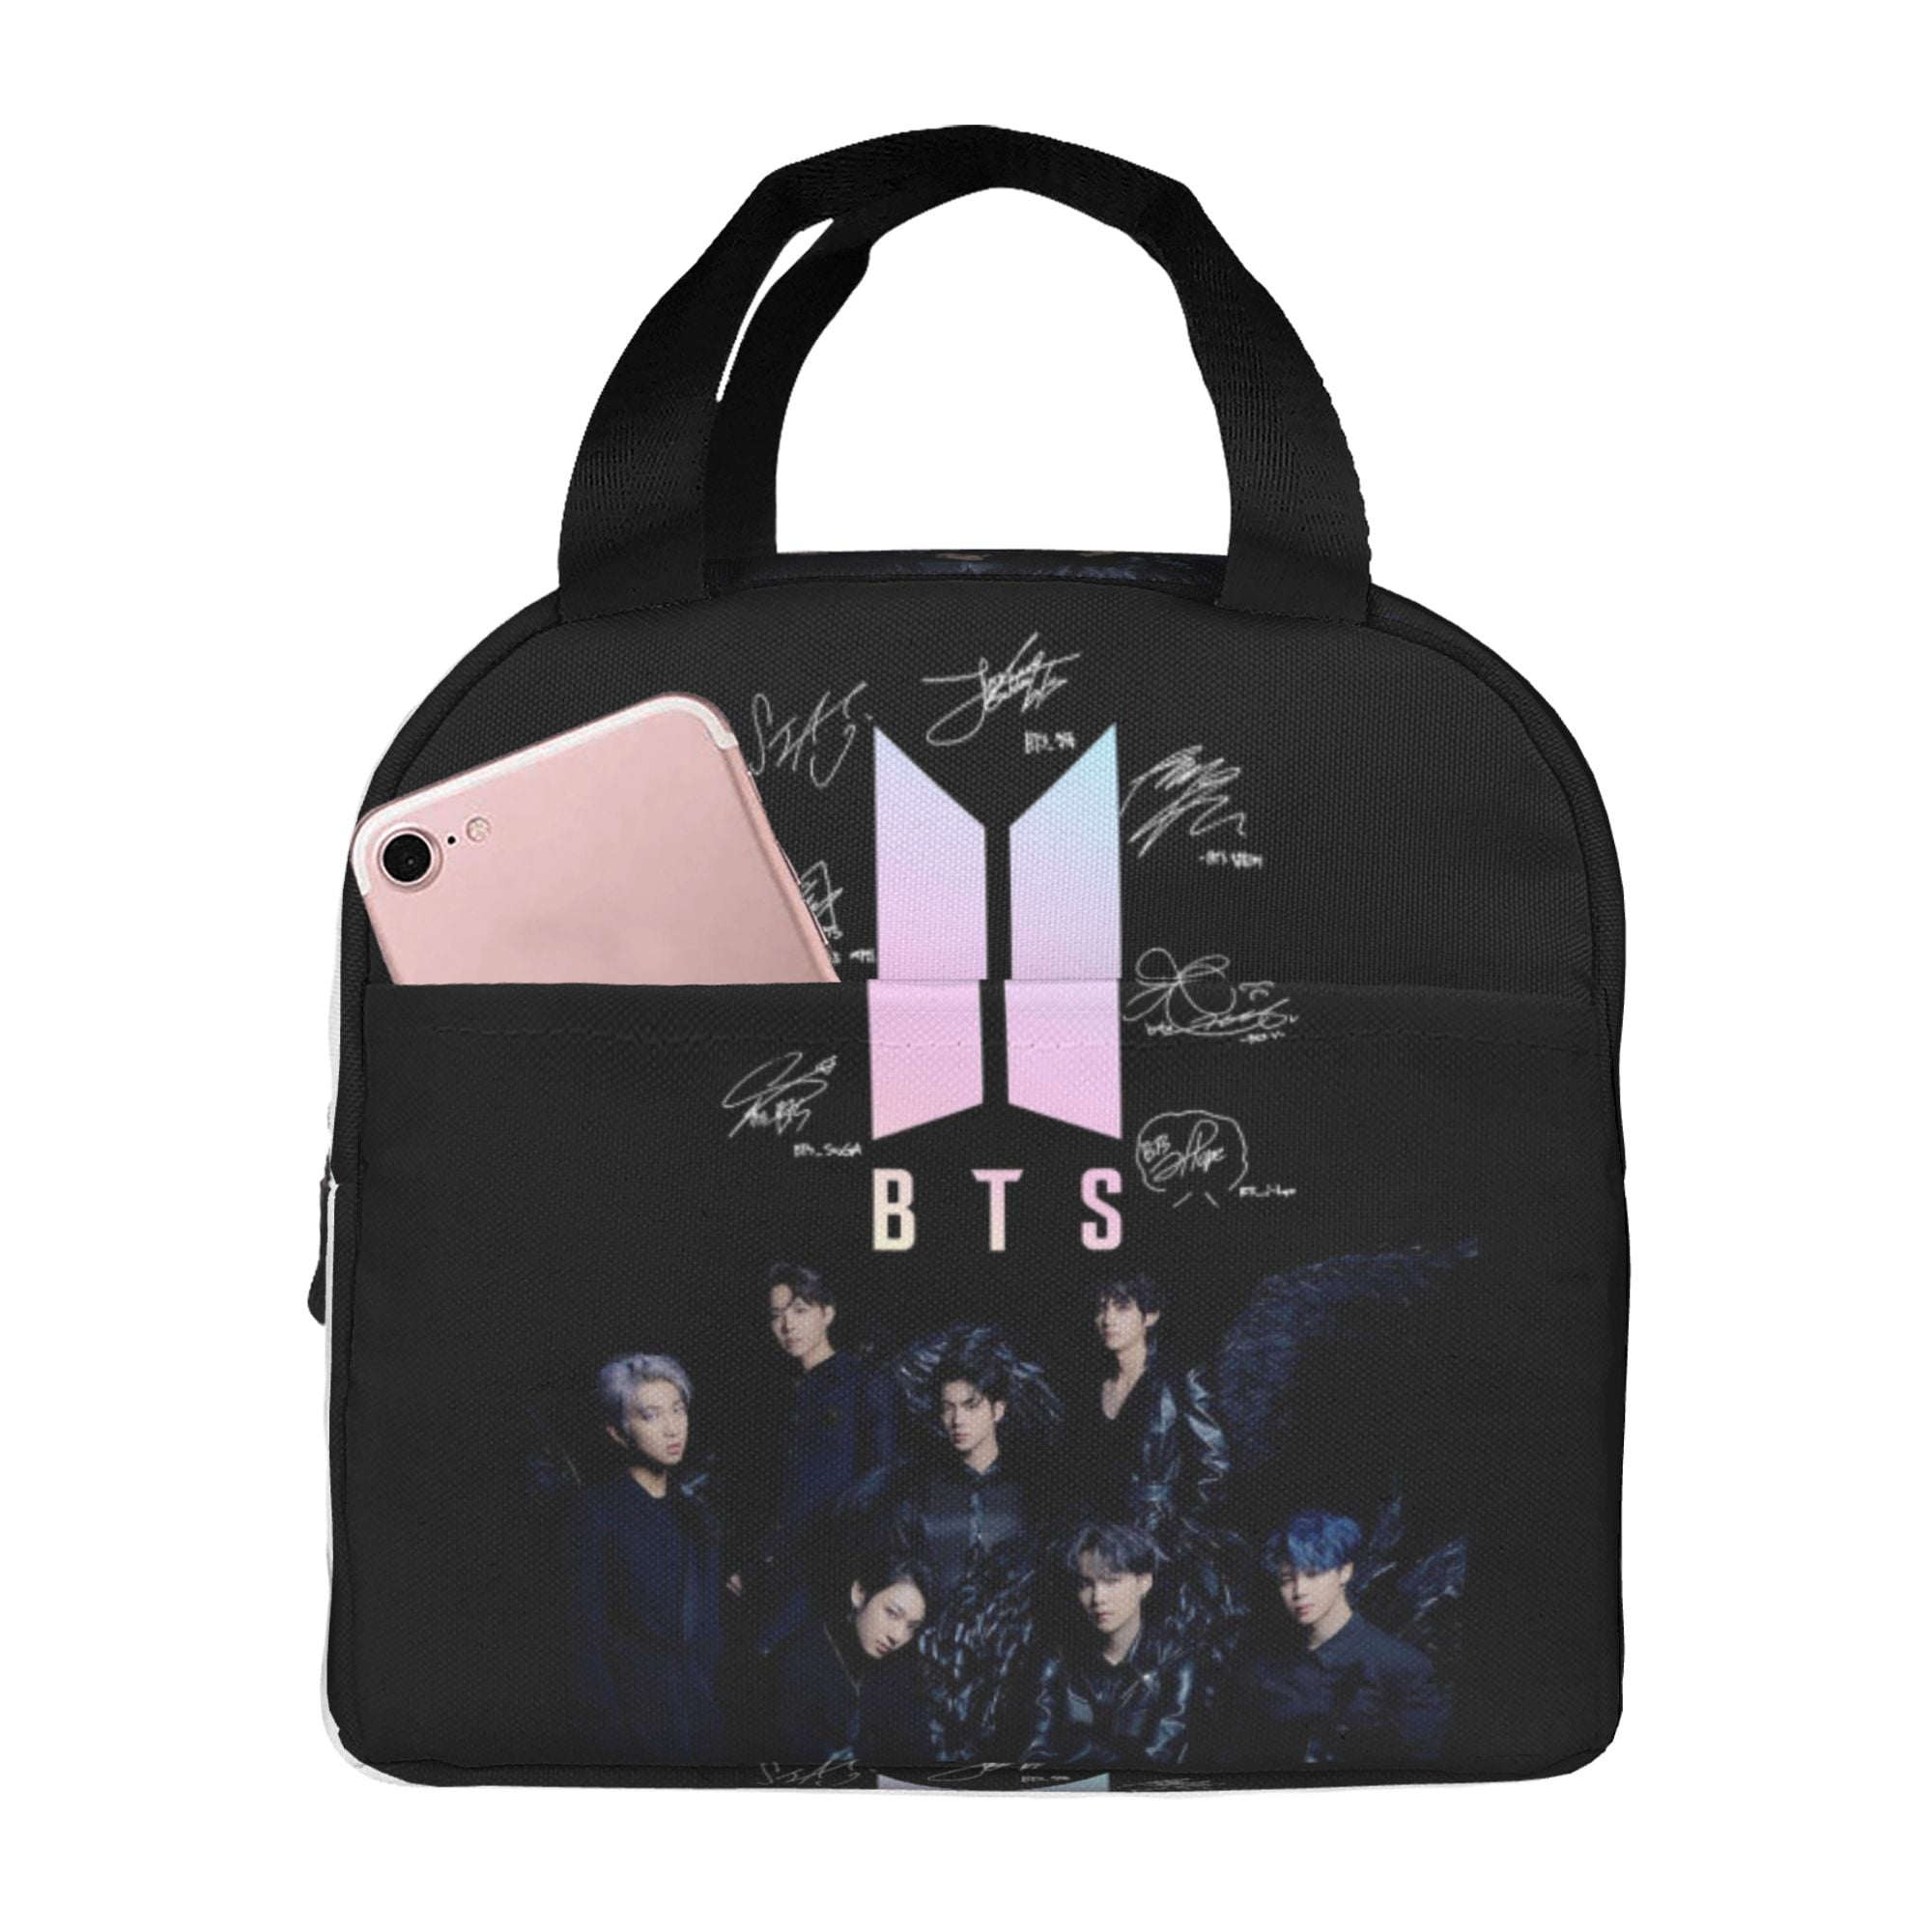 BTS - Lunch Bag